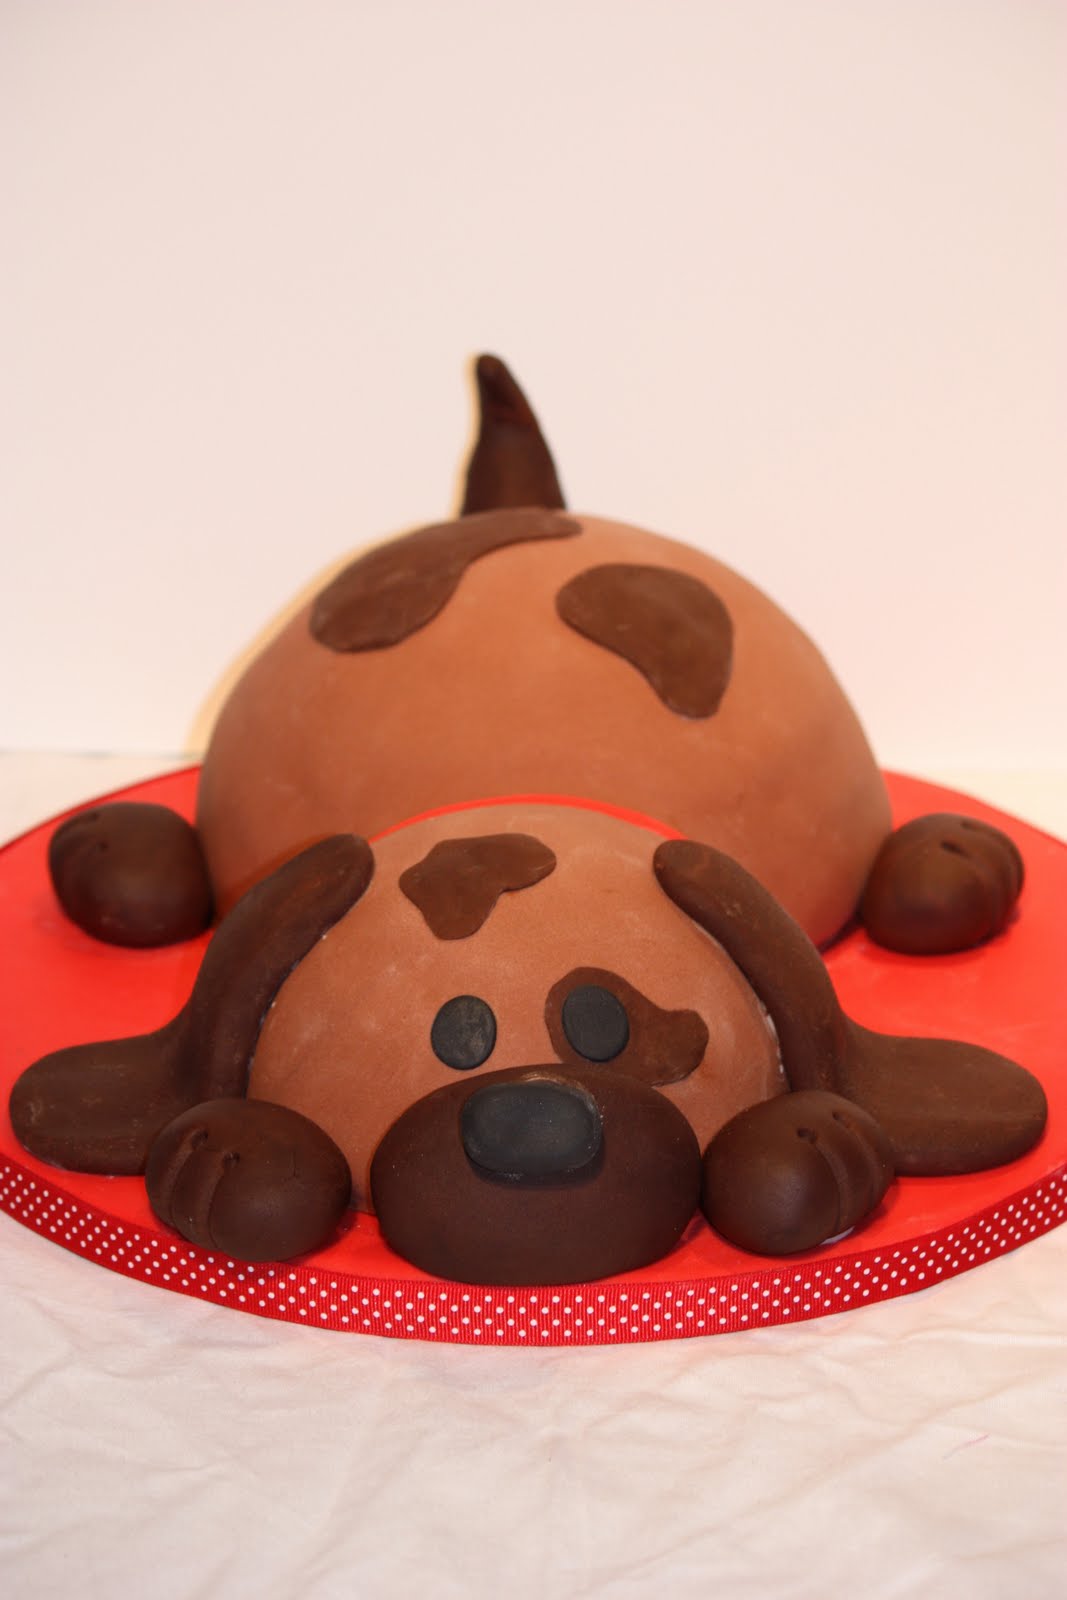 Whimsical by Design Puppy Dog Birthday Cake